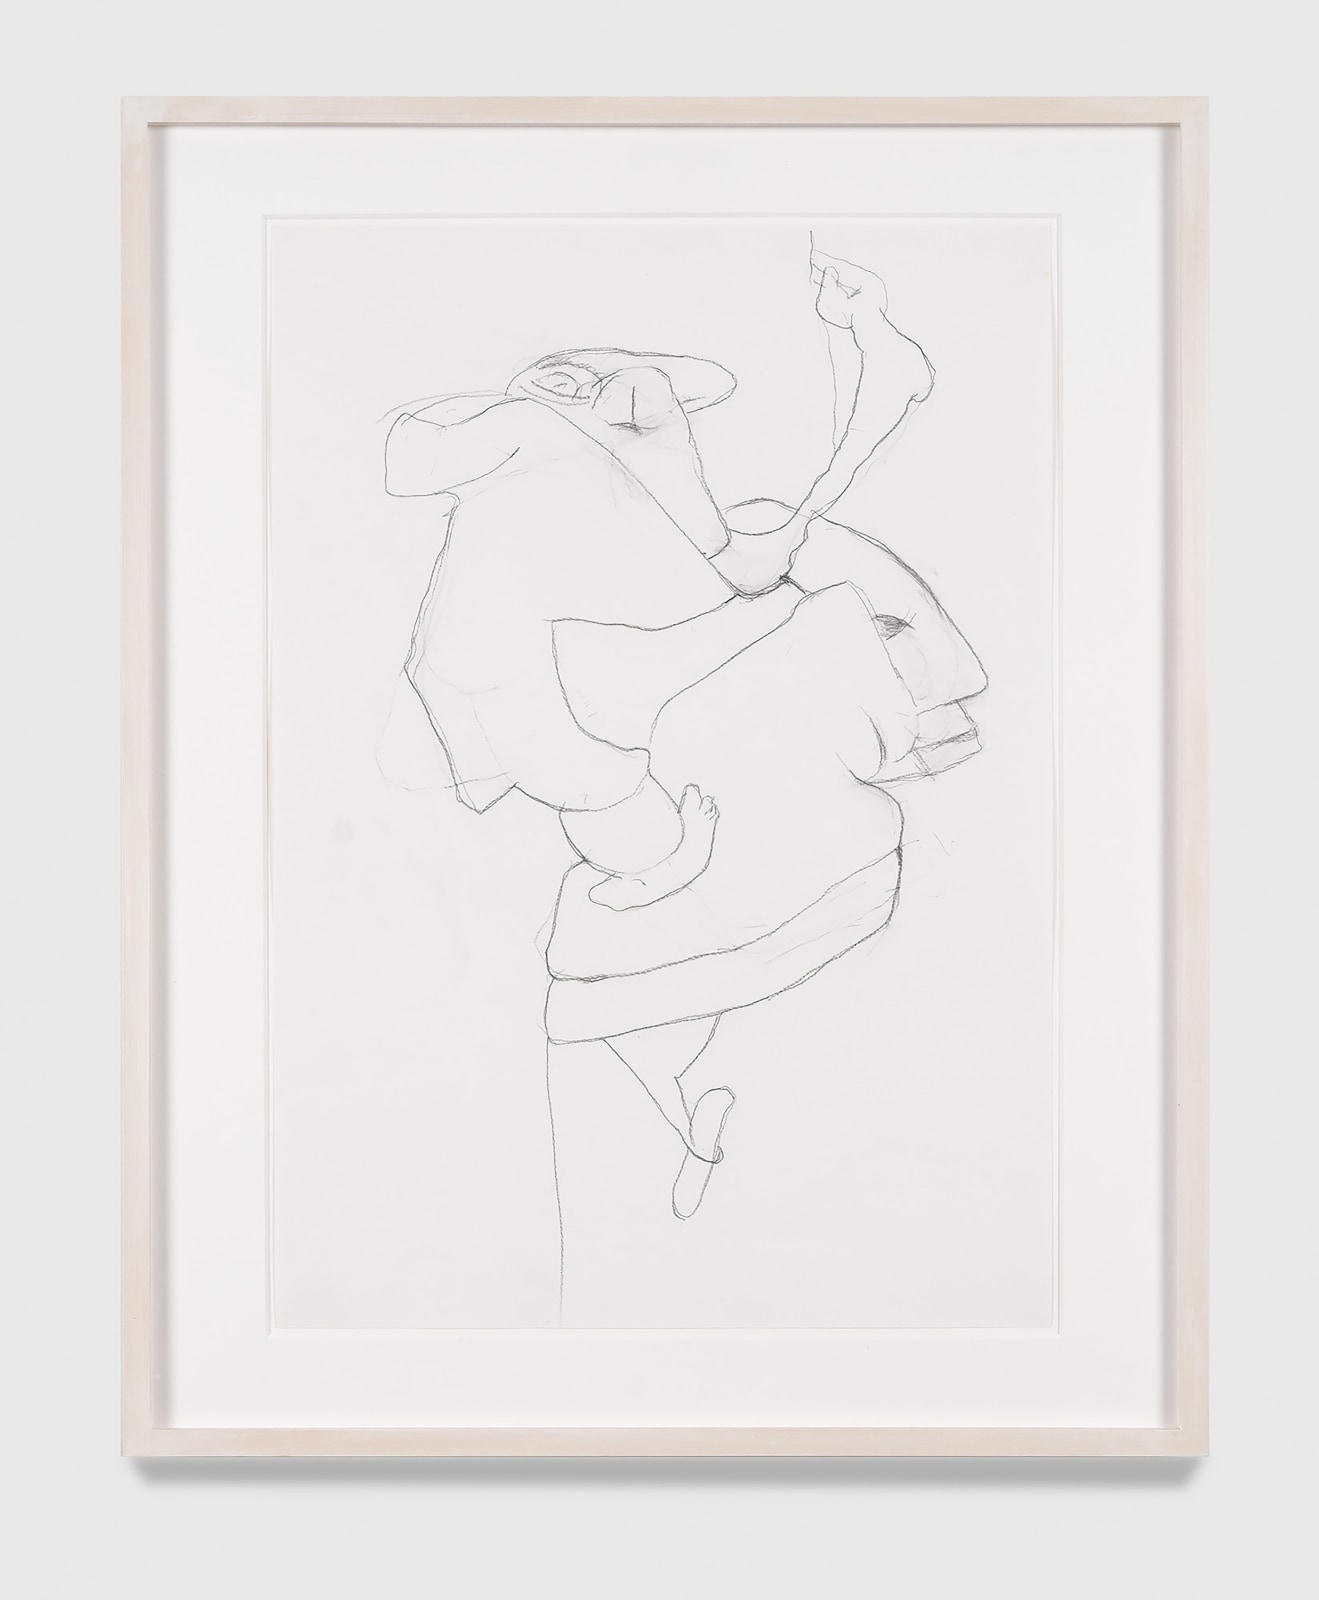 Maria Lassnig, Untitled, ca. 2000 - 2009